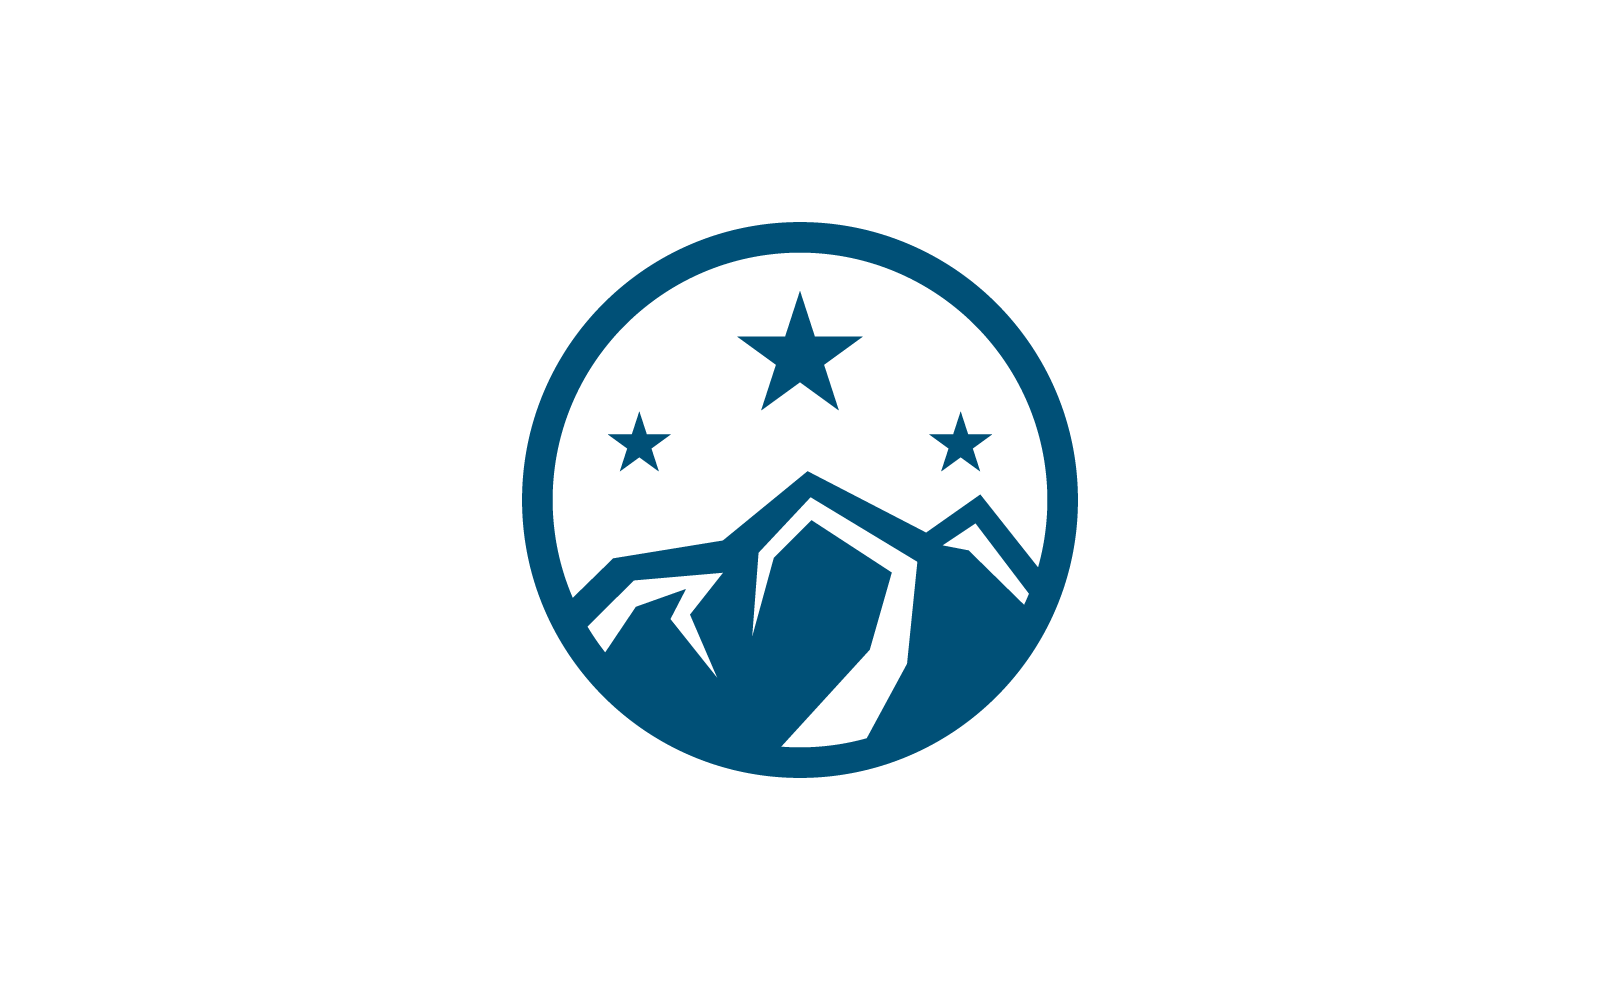 Mountain flat design logo vector illustration template